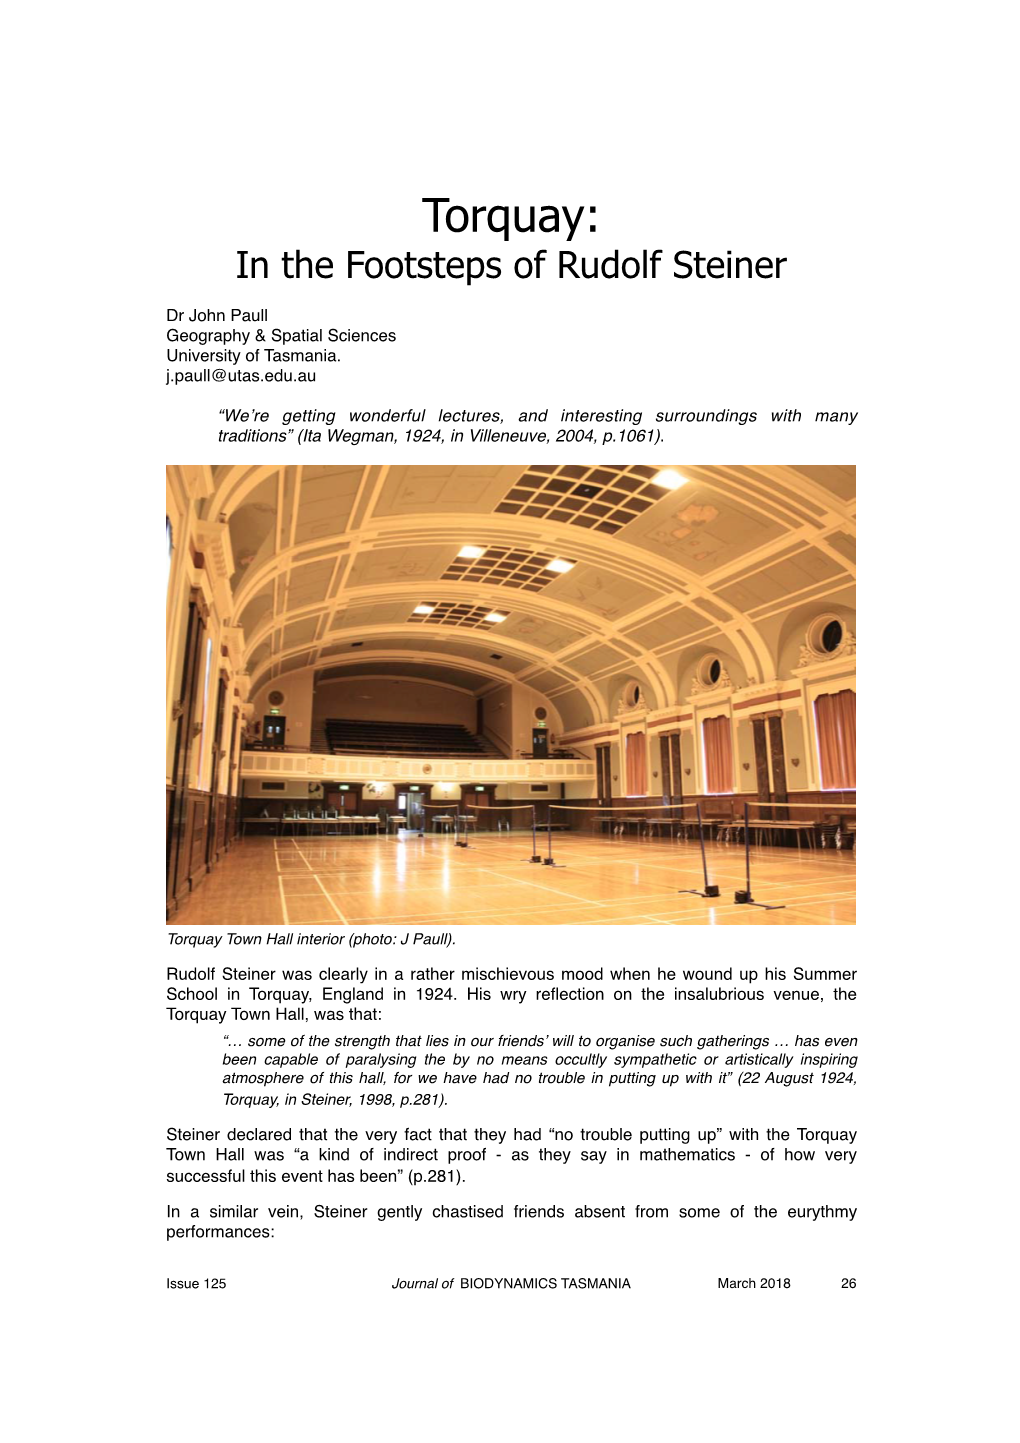 In the Footsteps of Rudolf Steiner